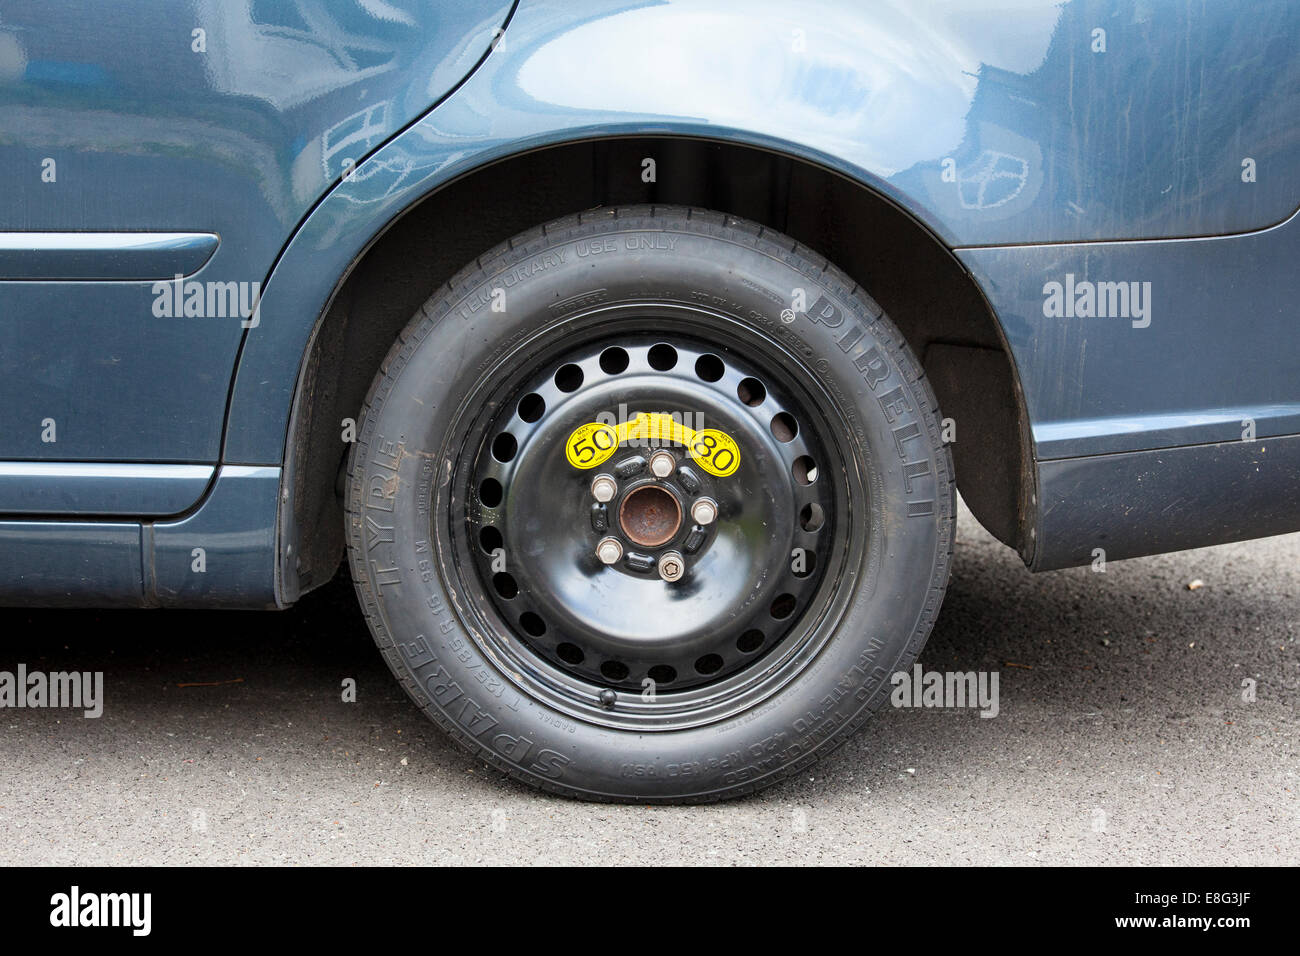 Notfall Reserverad montiert, Auto Stockfotografie - Alamy